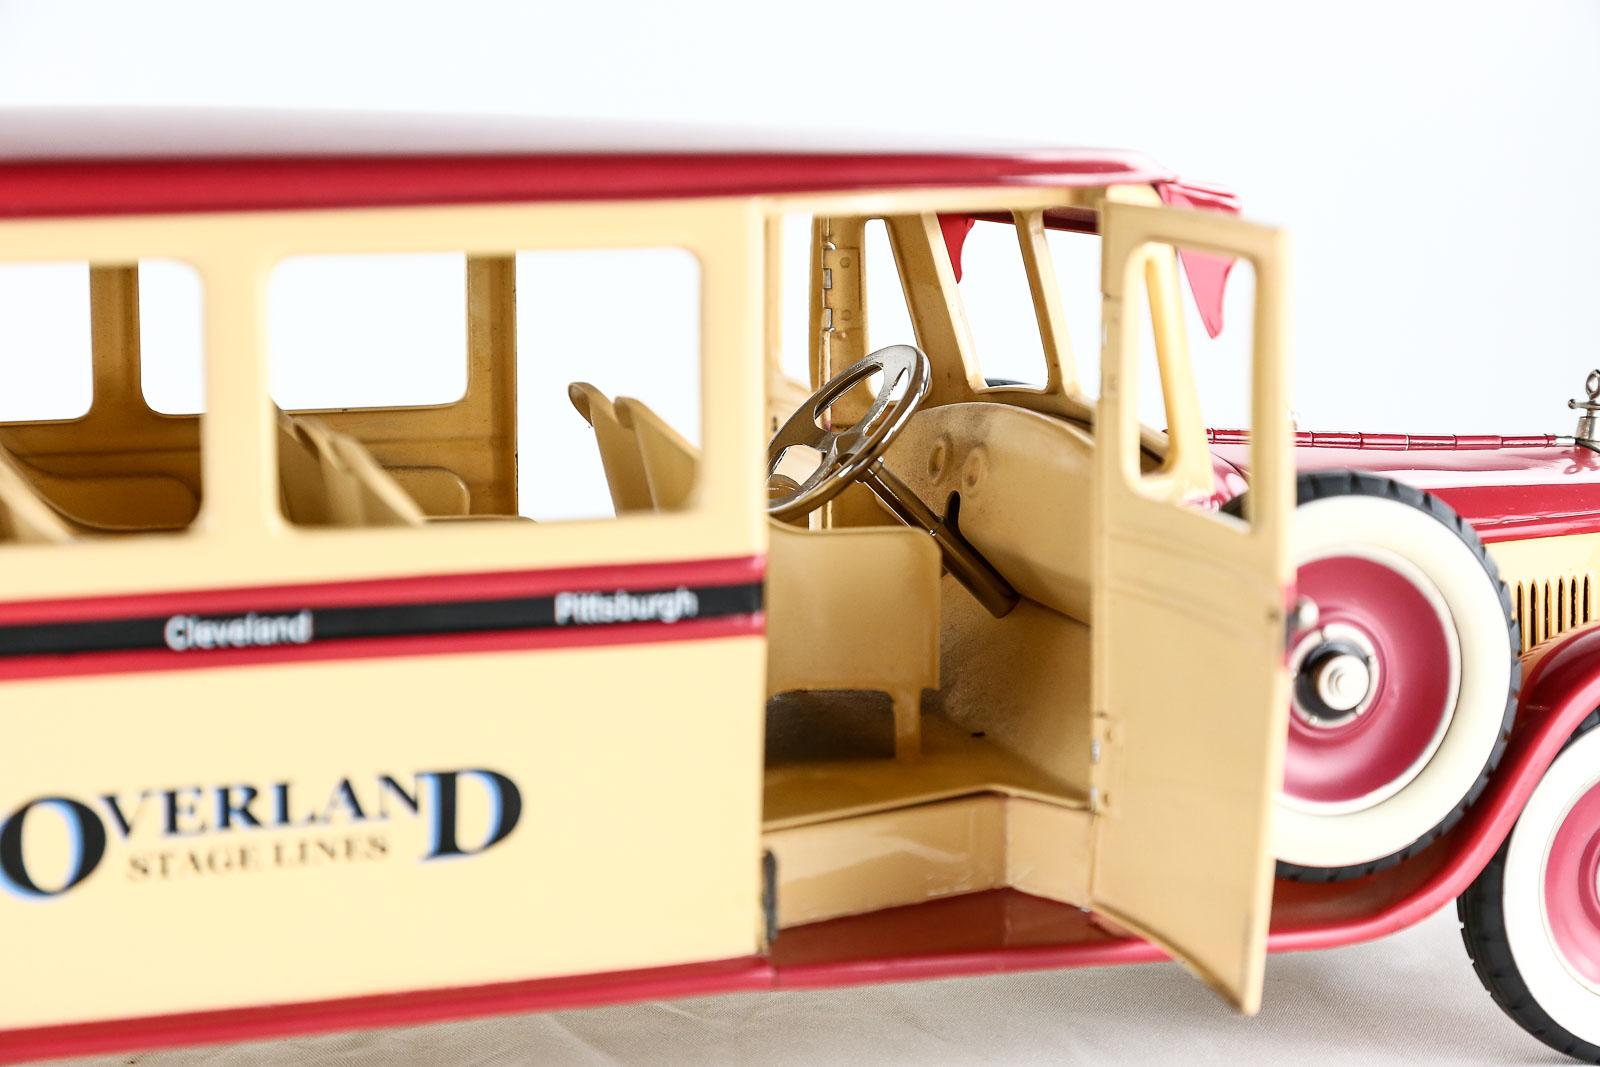 Overland Tour Bus Model